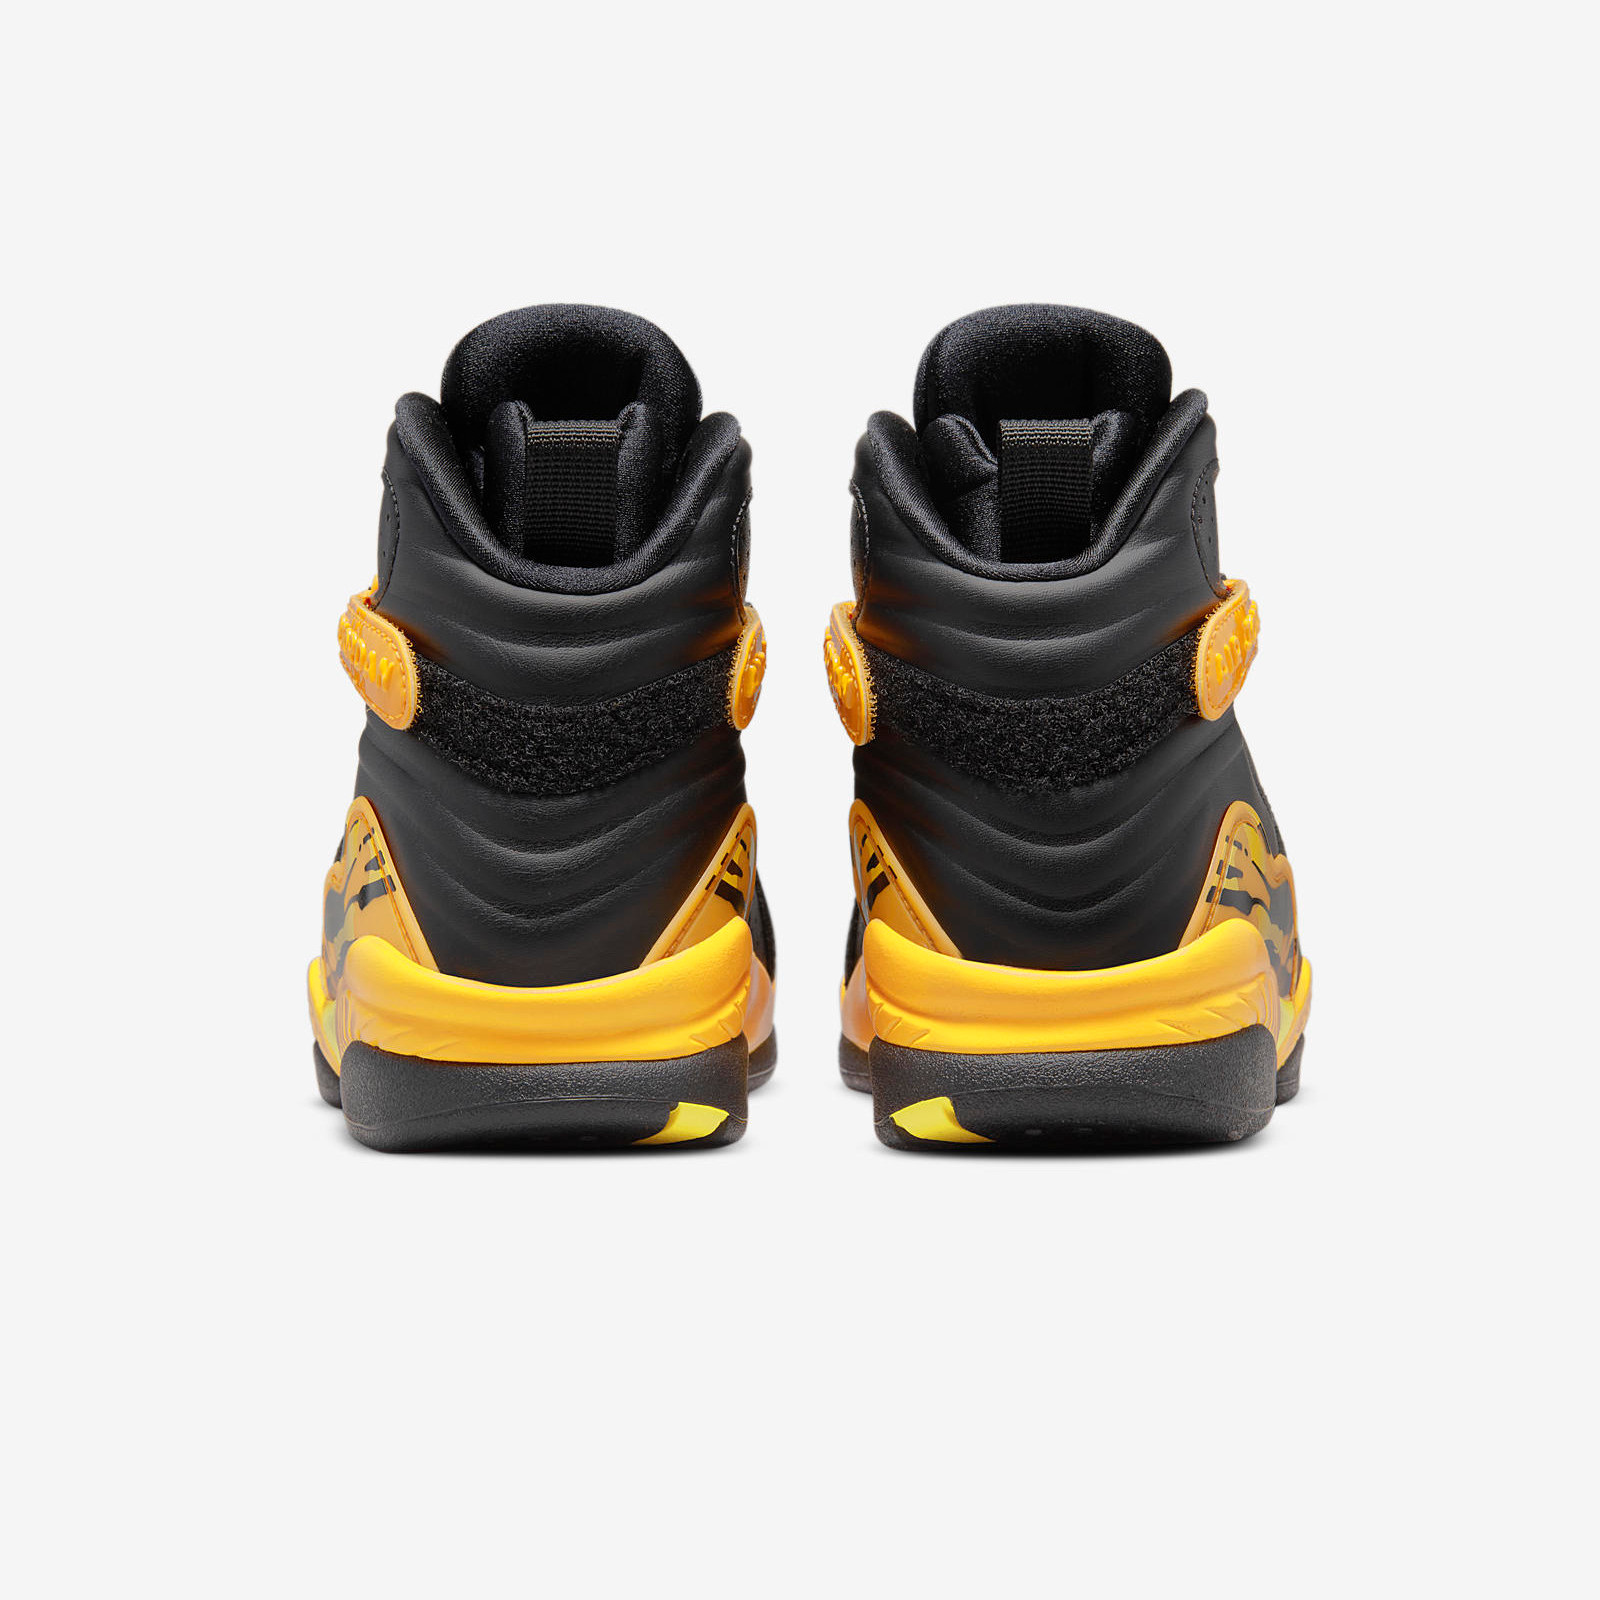 Air Jordan 8 Retro
Taxi Yellow / Black